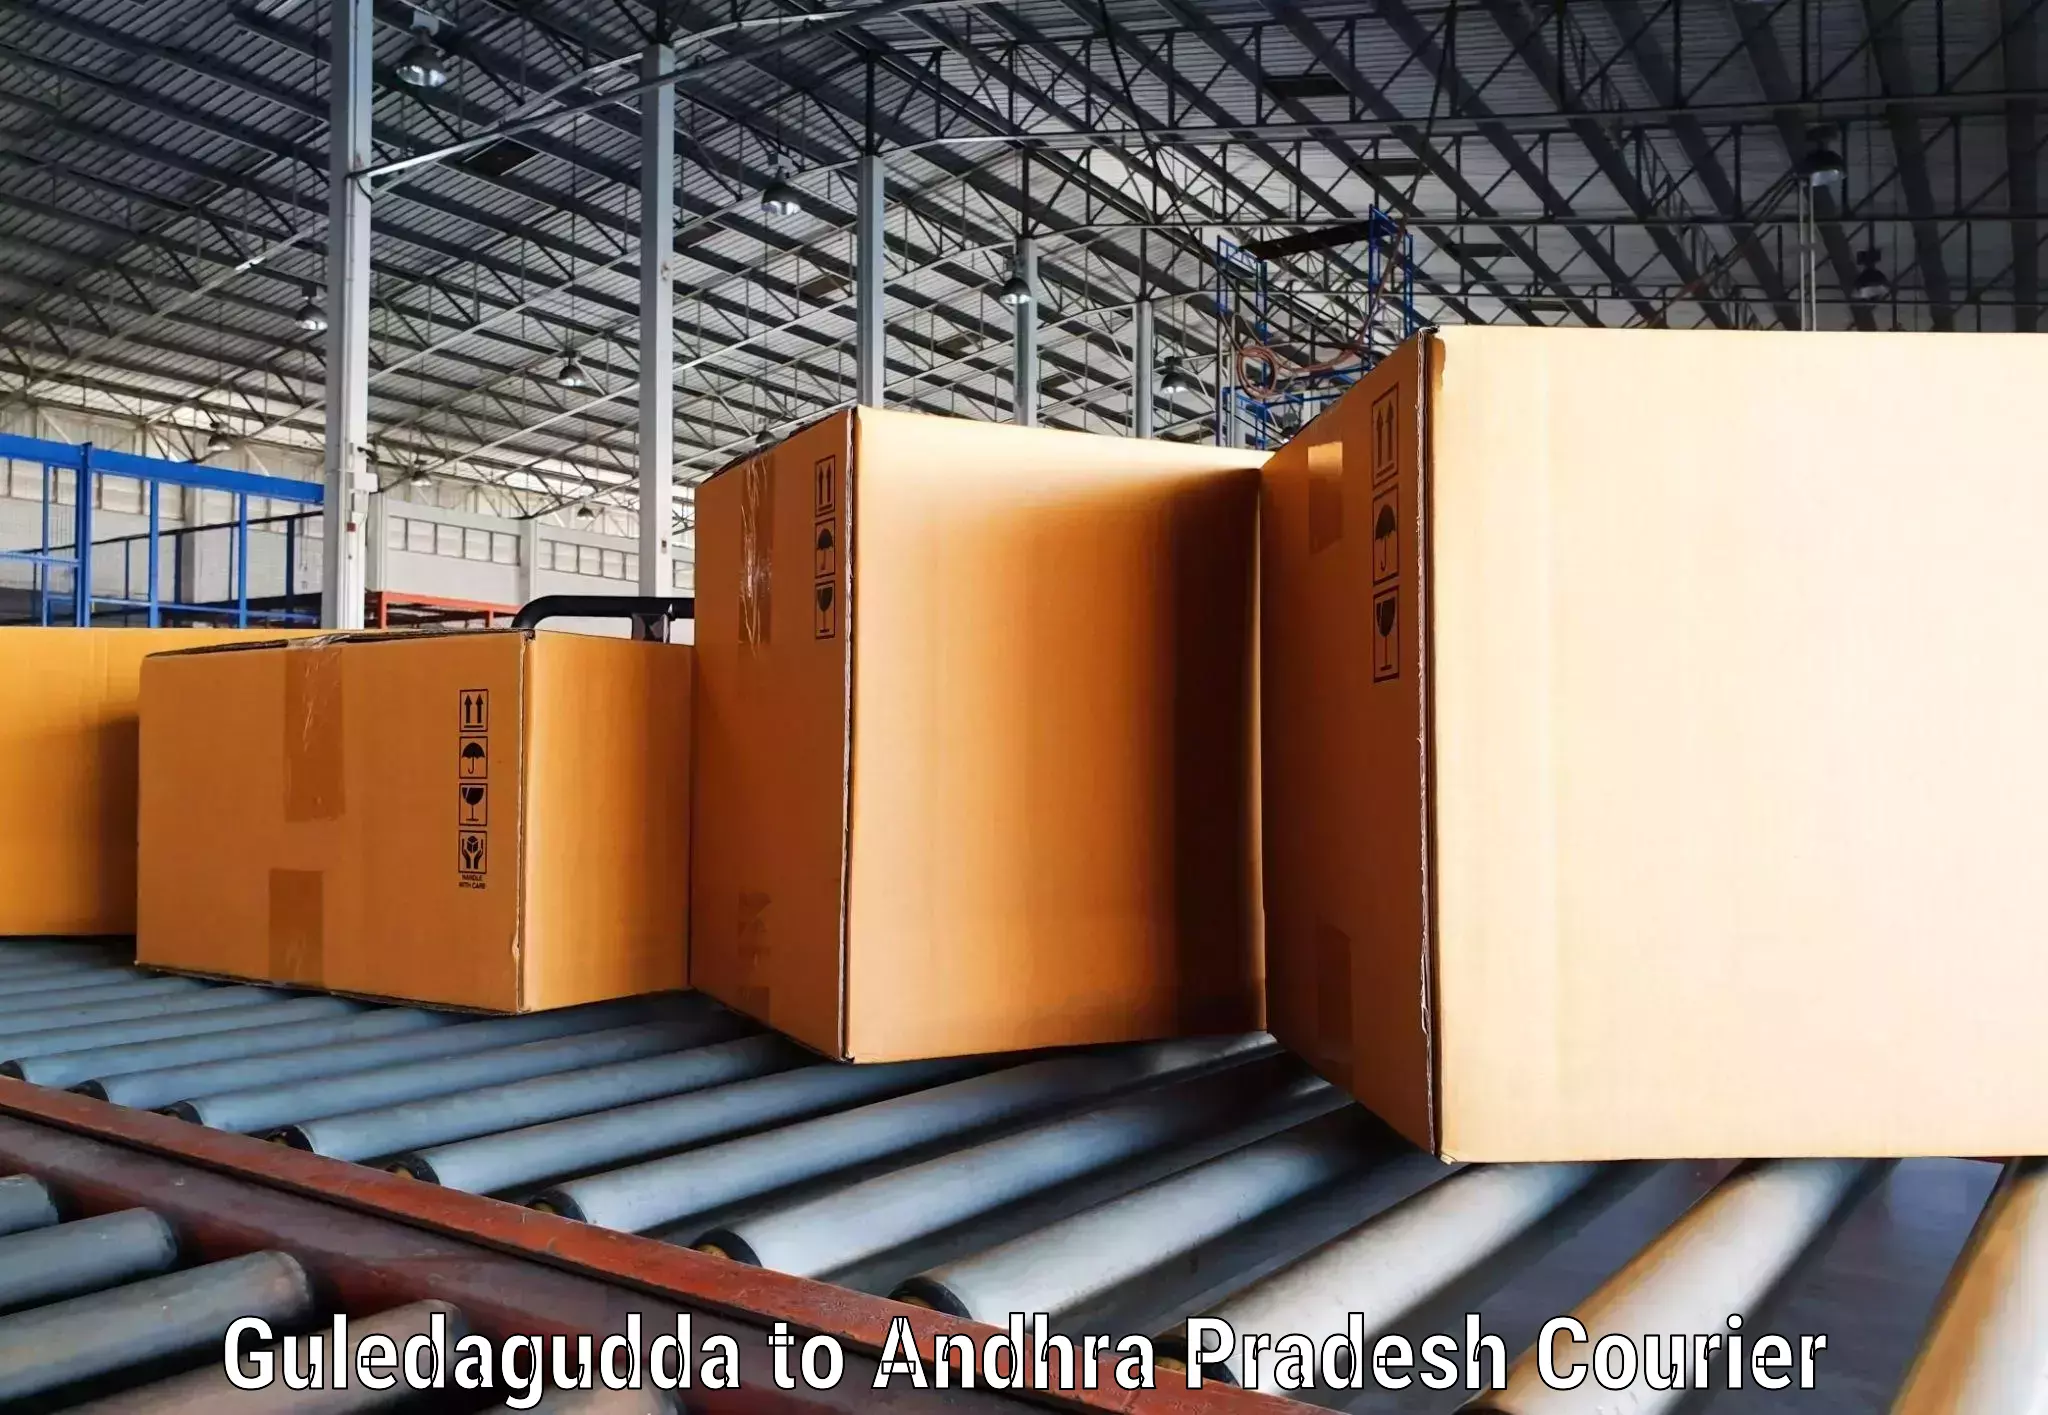 Business shipping needs Guledagudda to Andhra Pradesh